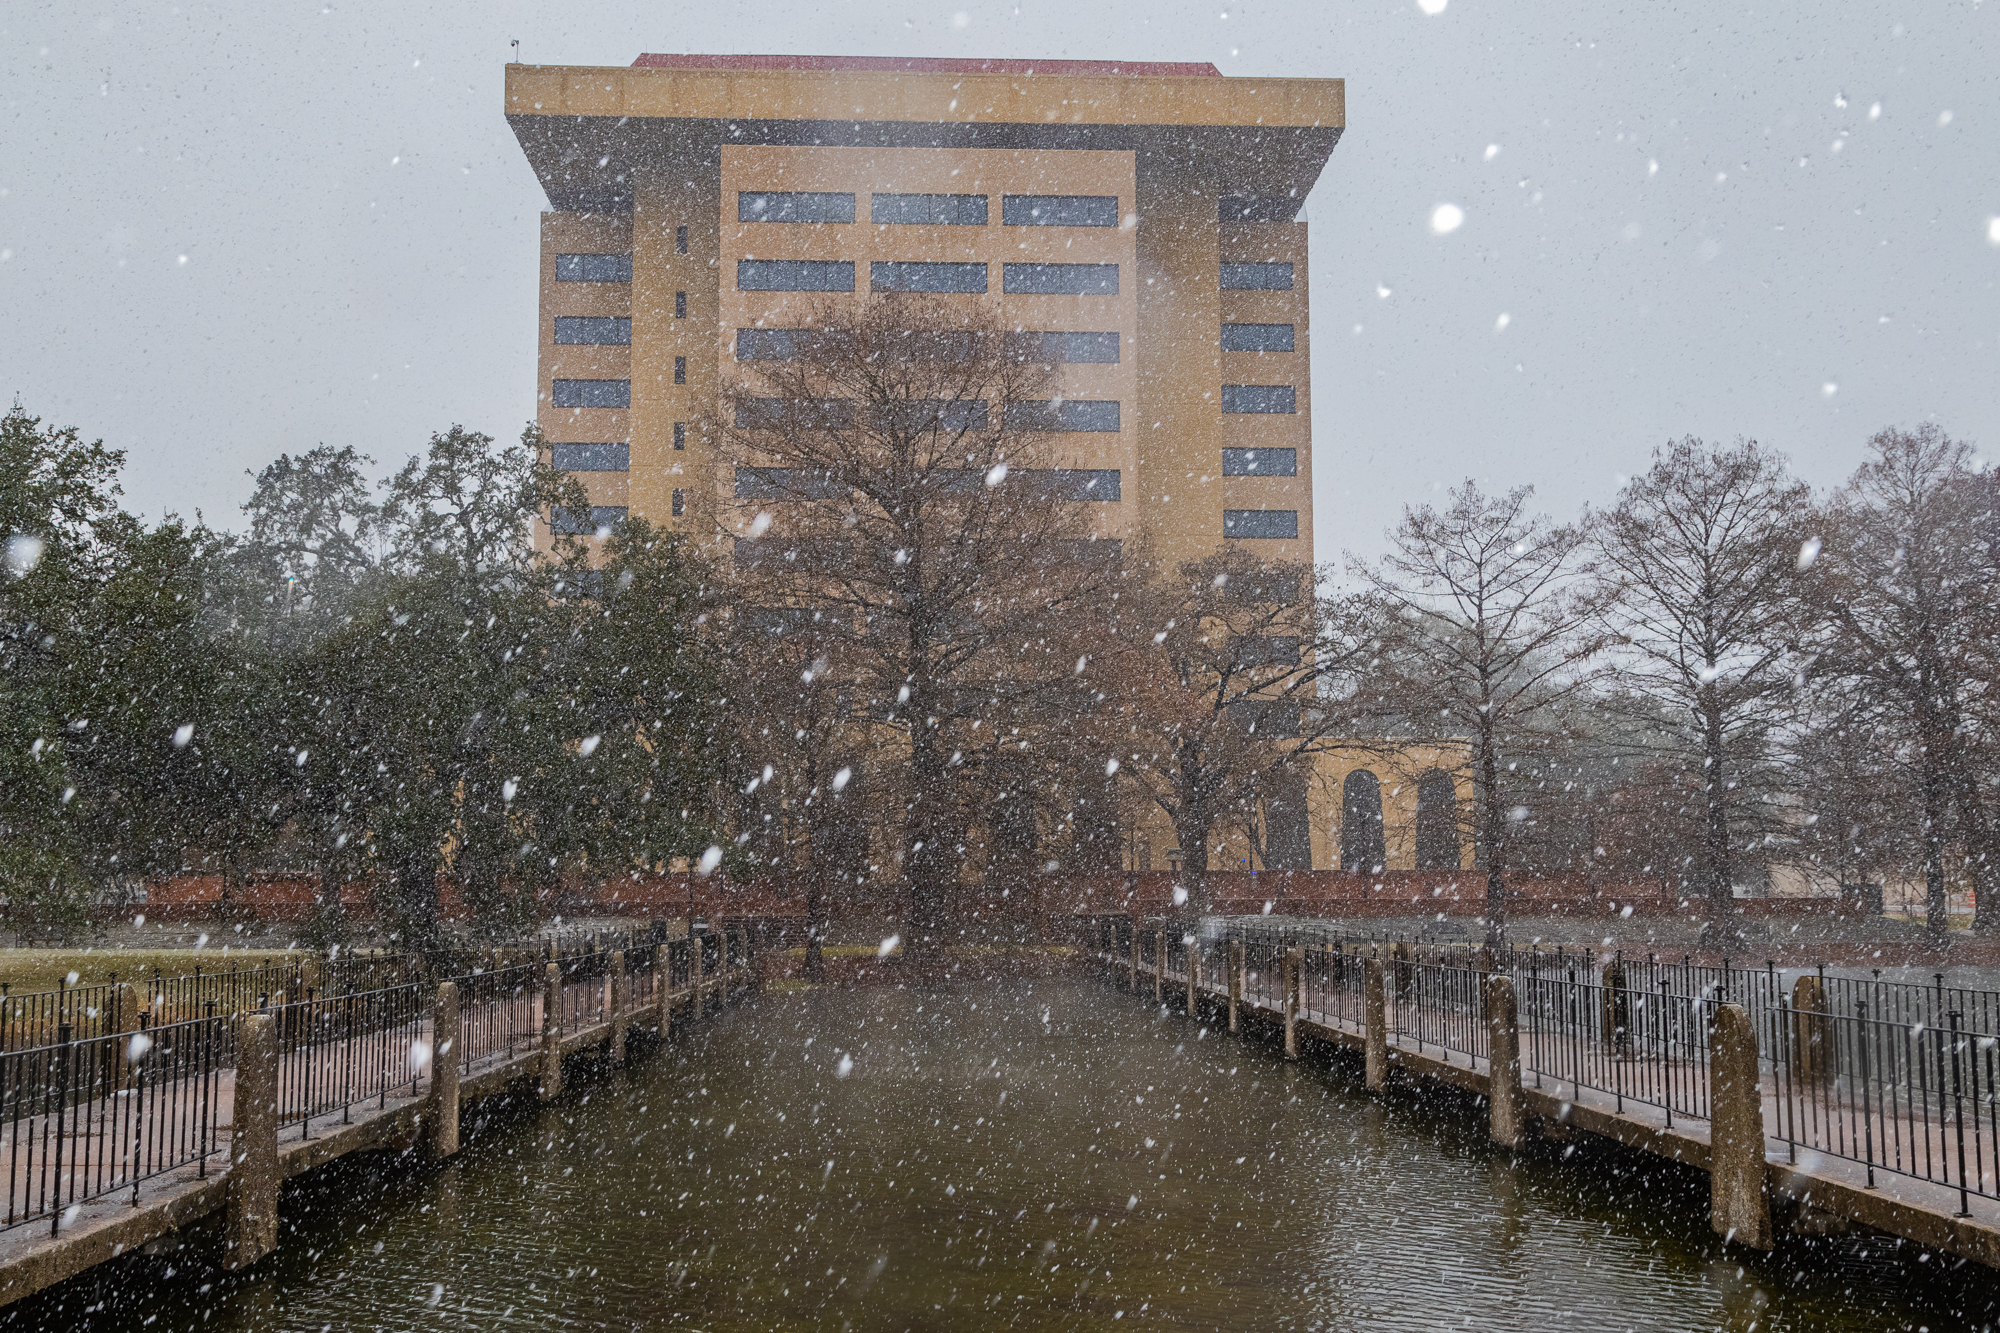 Snowfall+returns+to+San+Marcos+ahead+of+spring+semester